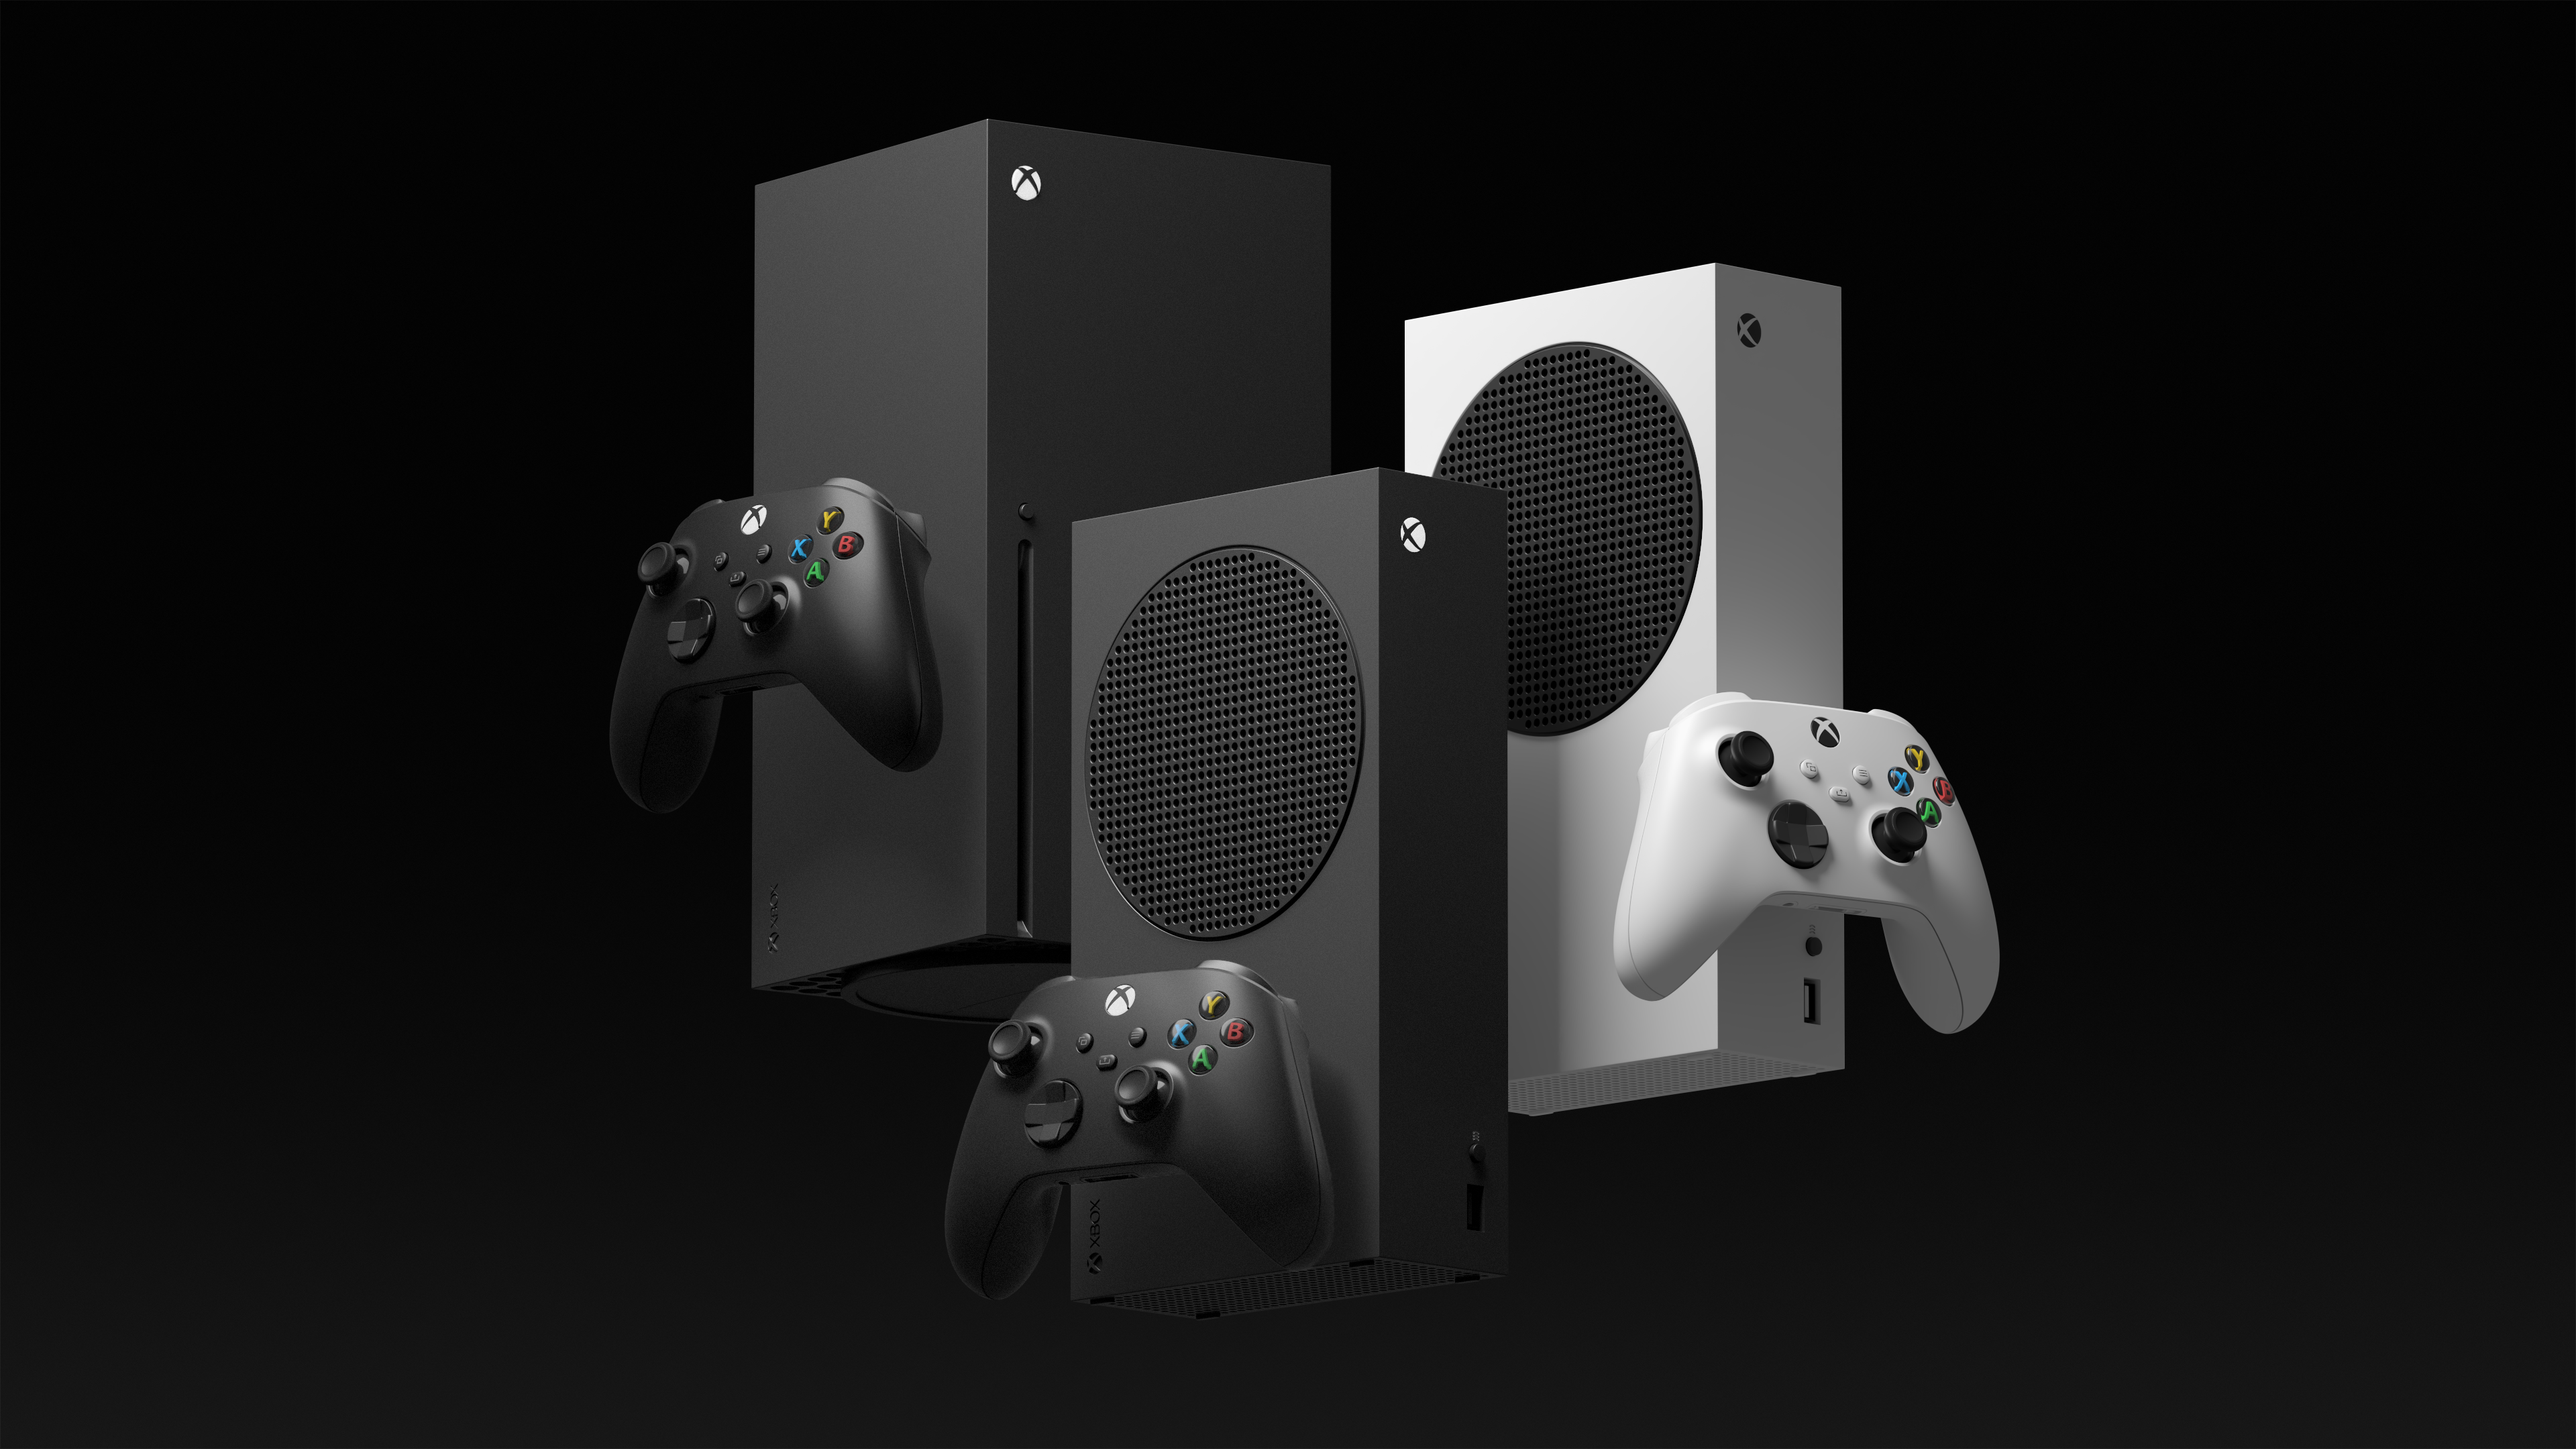 Microsoft's Xbox 360 Launch